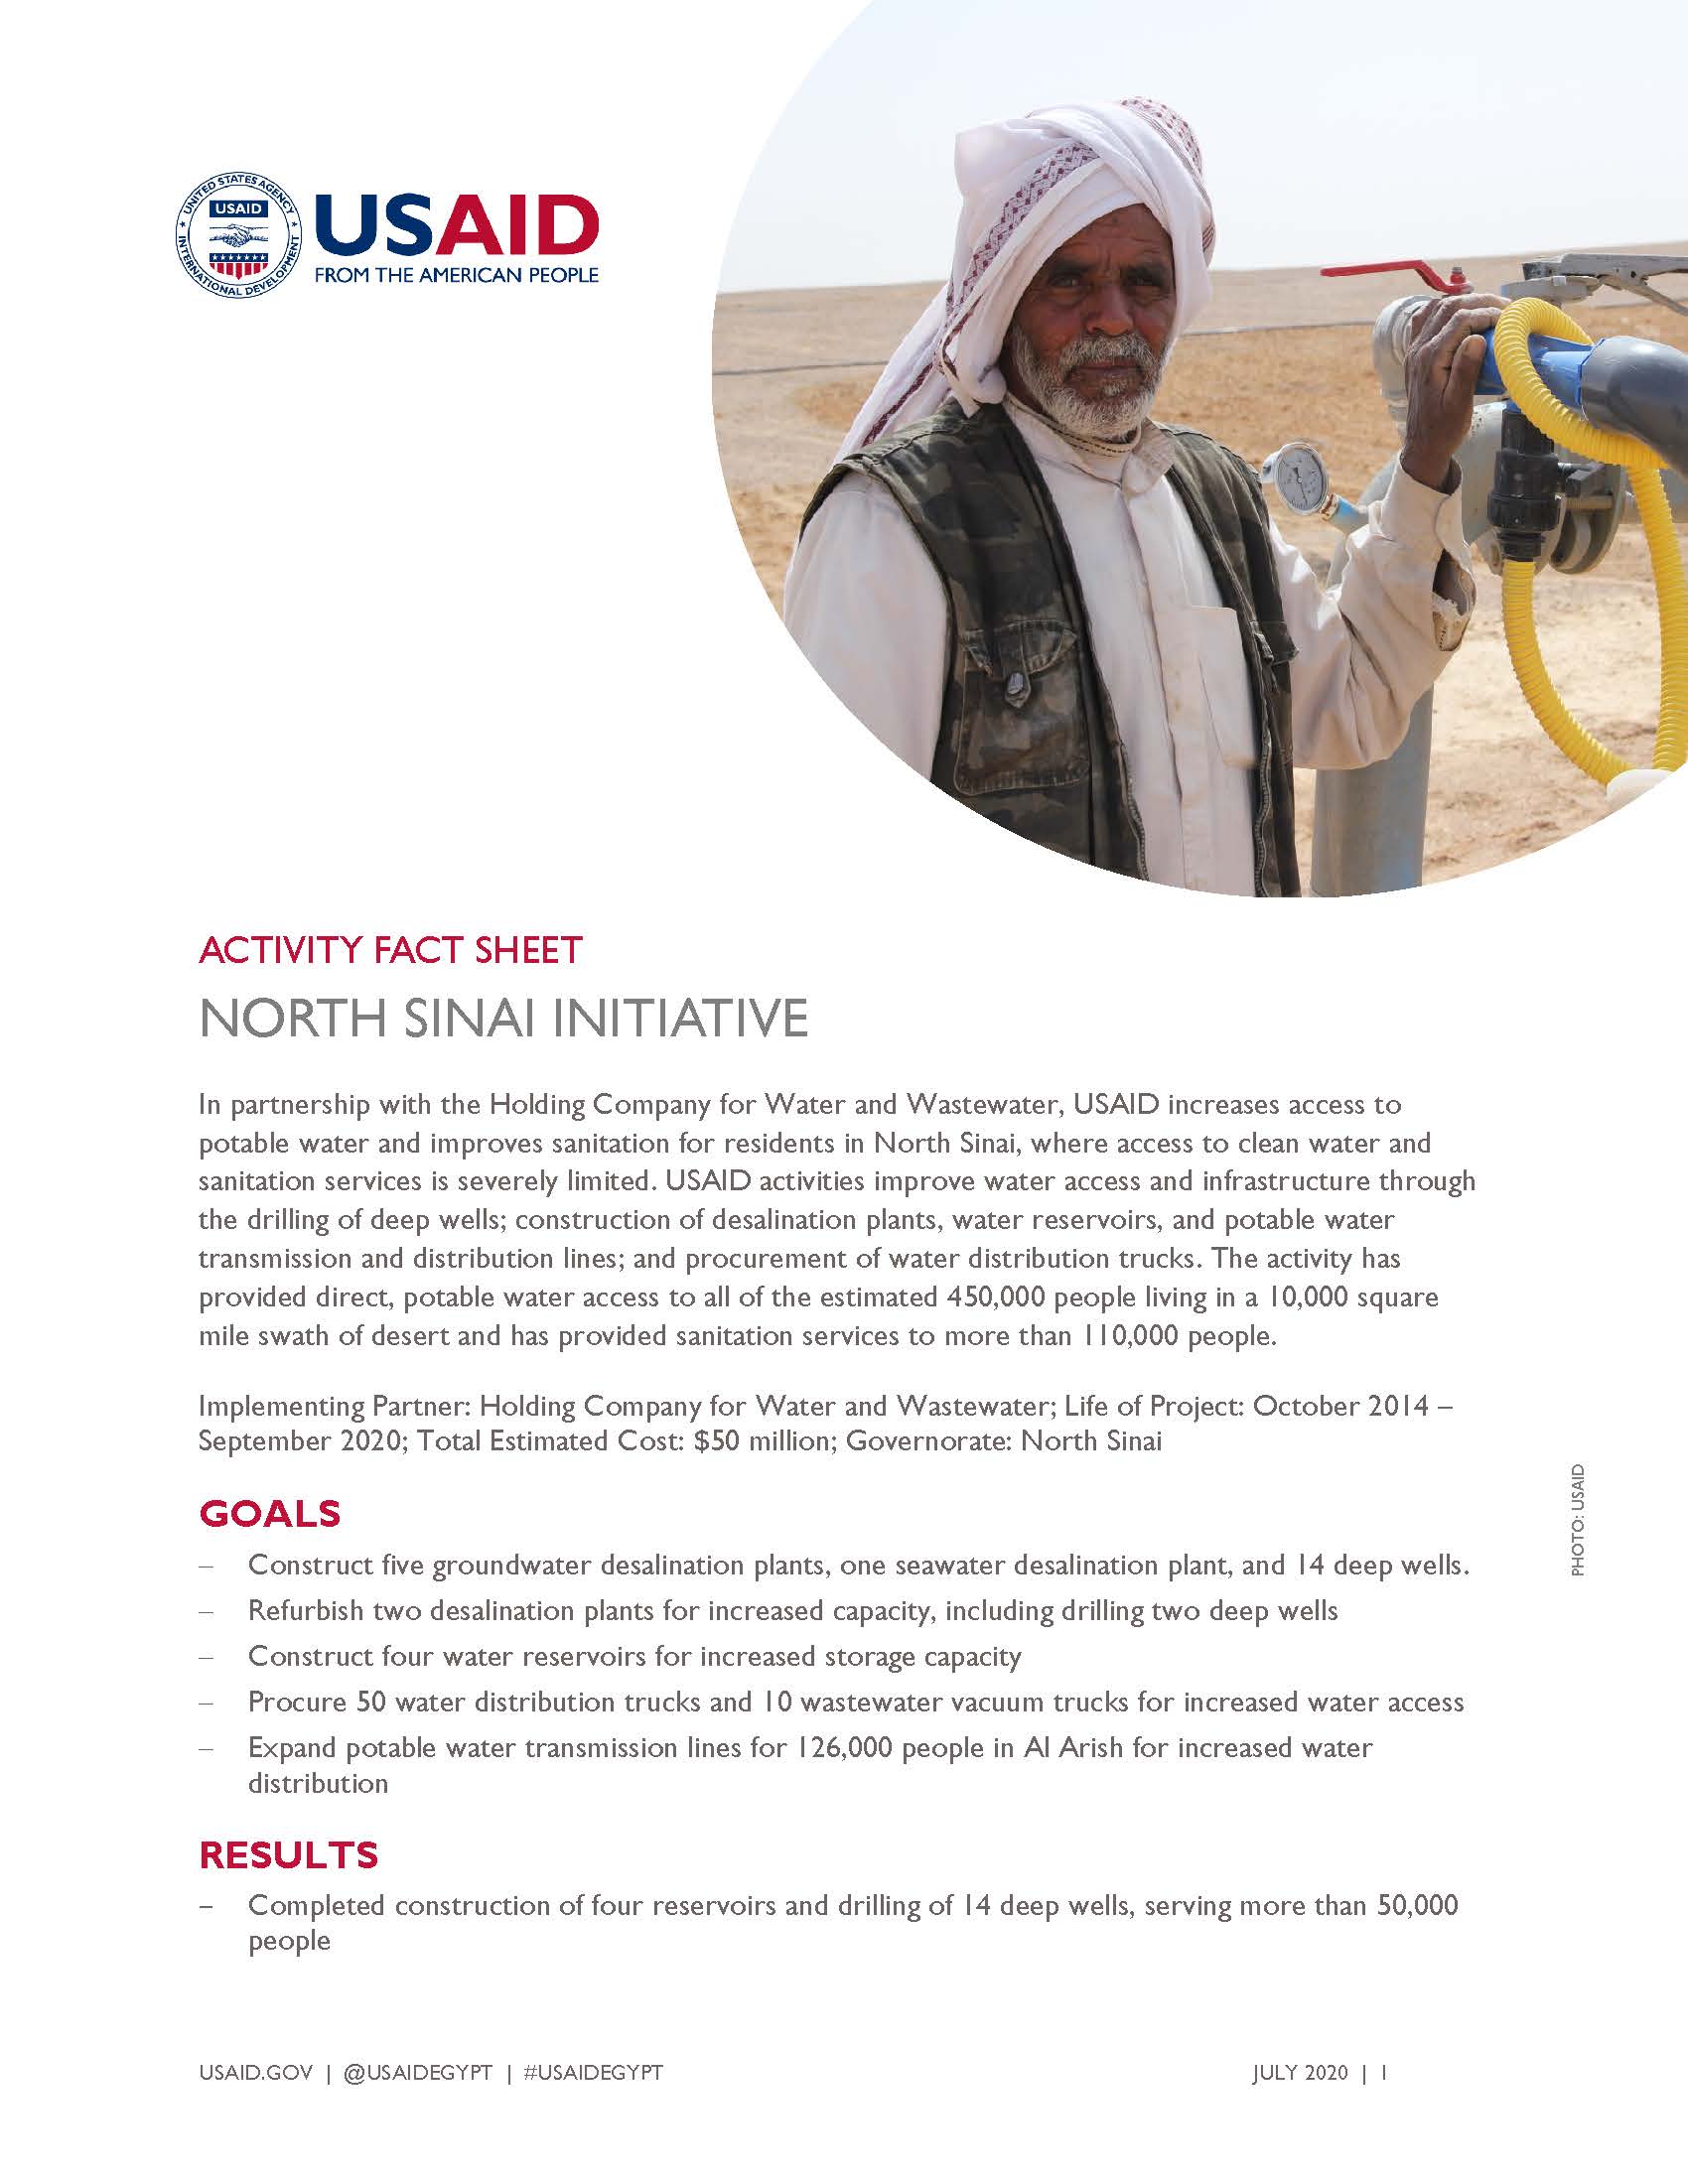 USAID/Egypt Activity Fact Sheet: North Sinai Initiative